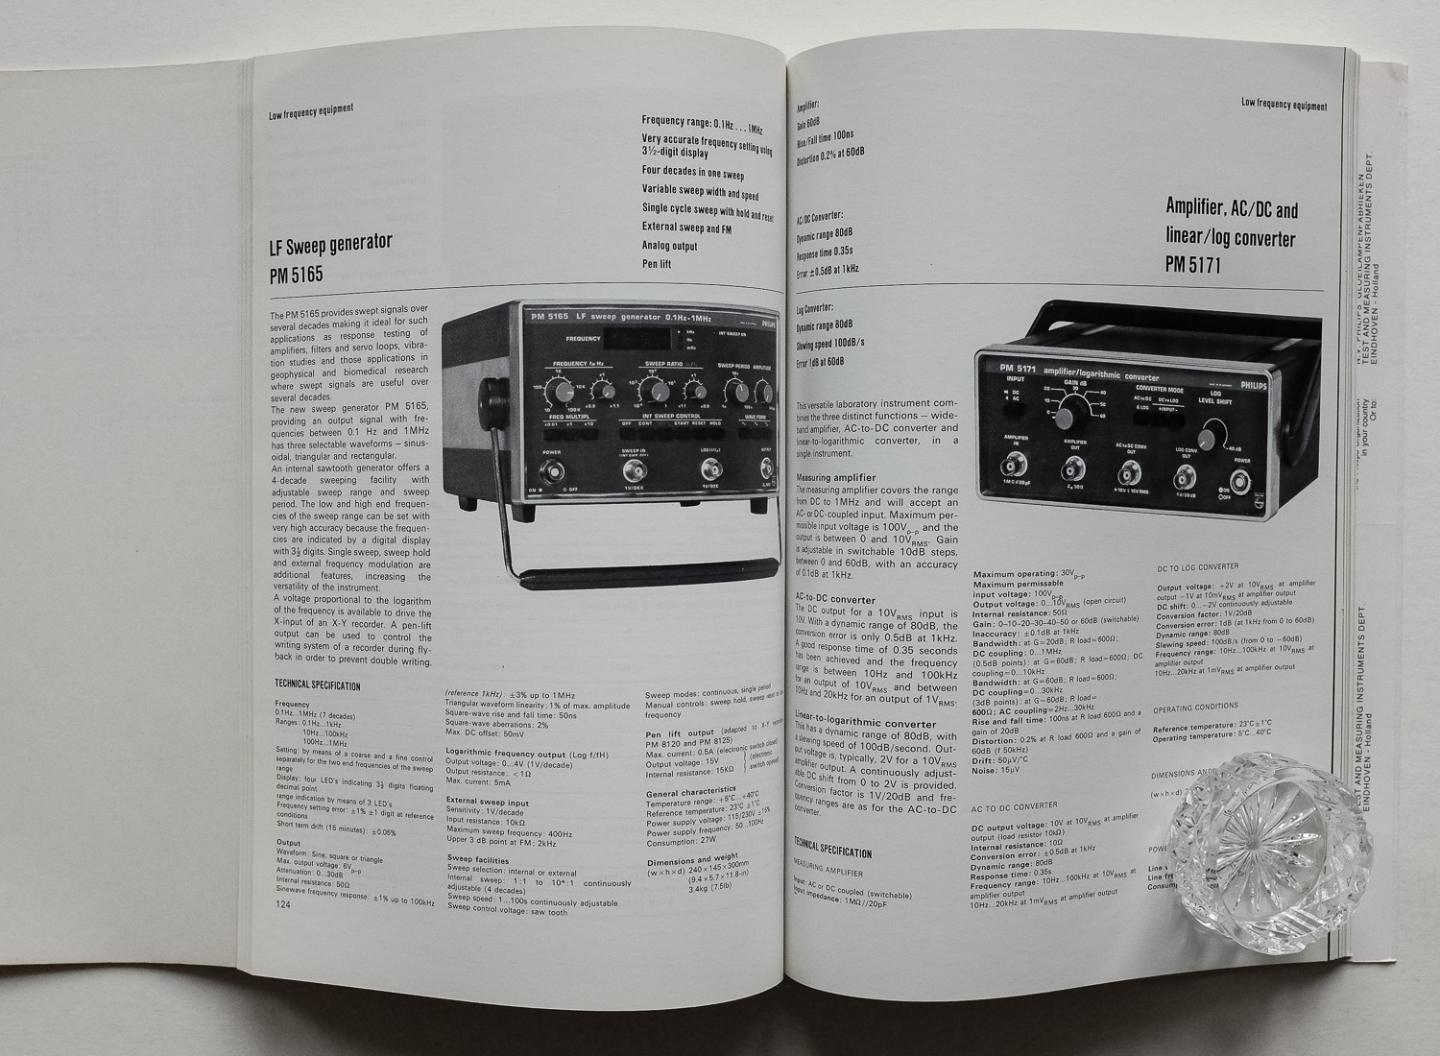 Philips Gloeilampenfabrieken Nederland n.v., Eindhoven - Test and measuring instruments - catalog 1979/88